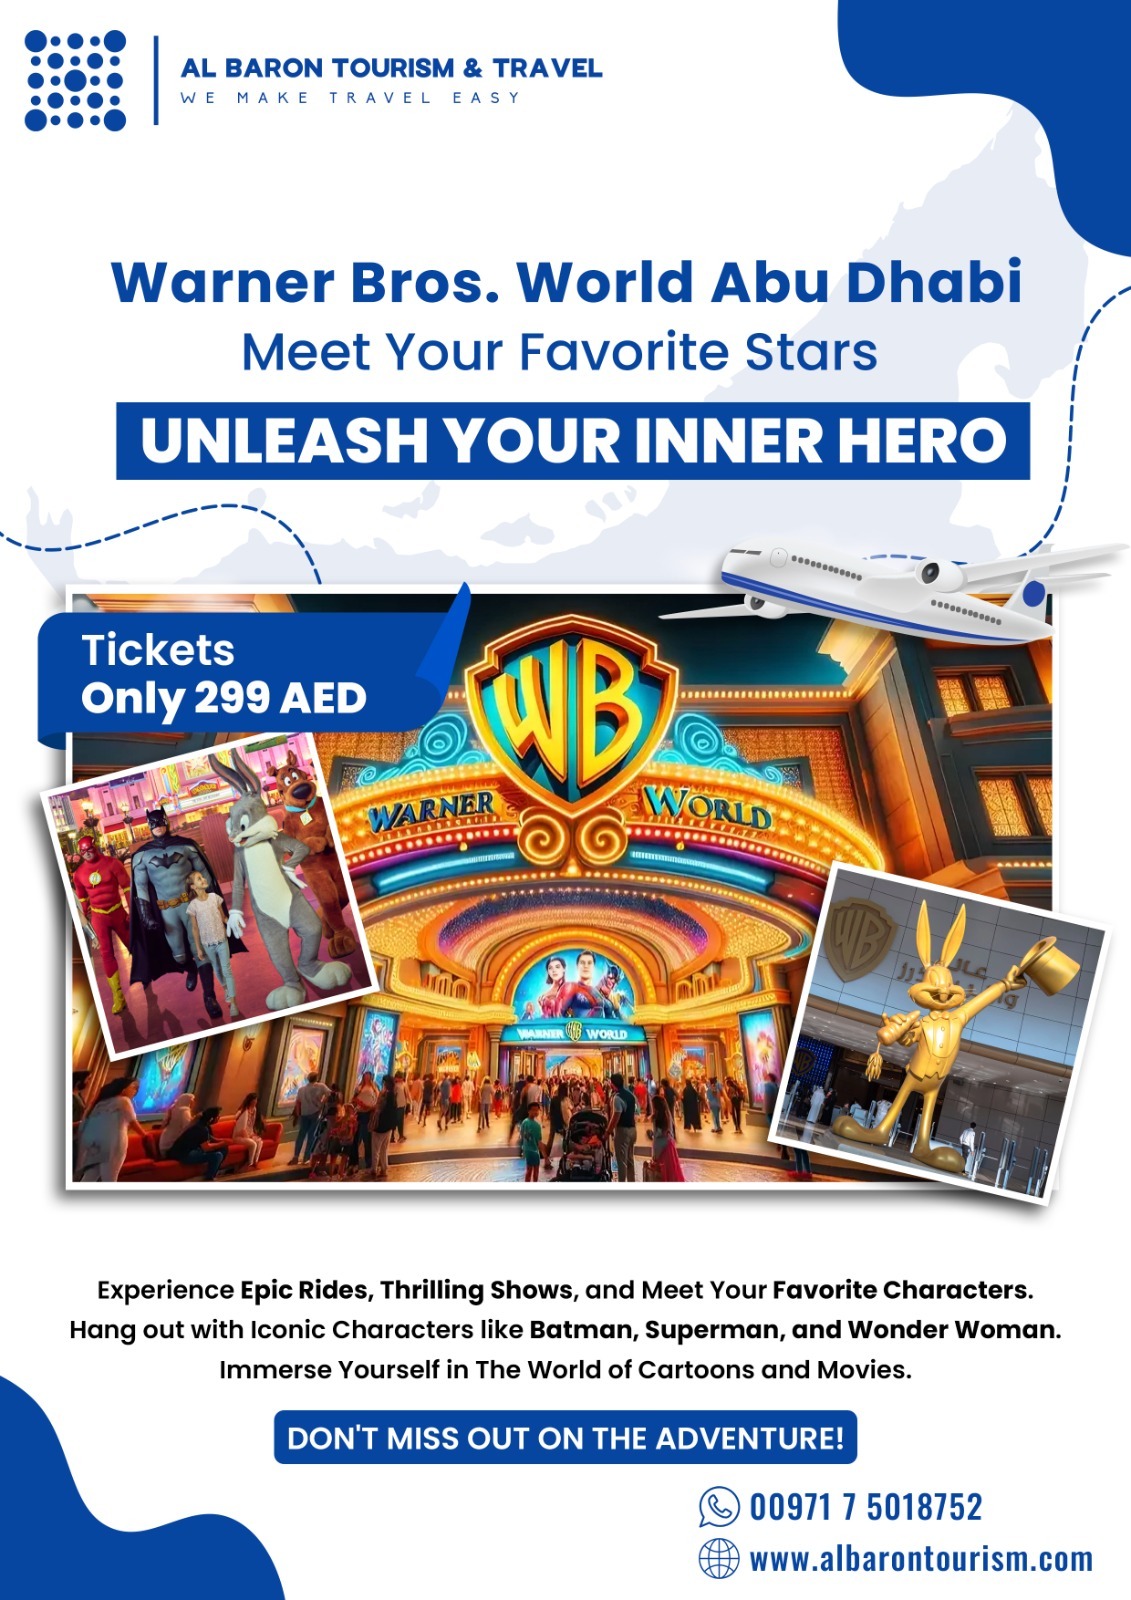 Warner Bros. Abu Dhabi ticket